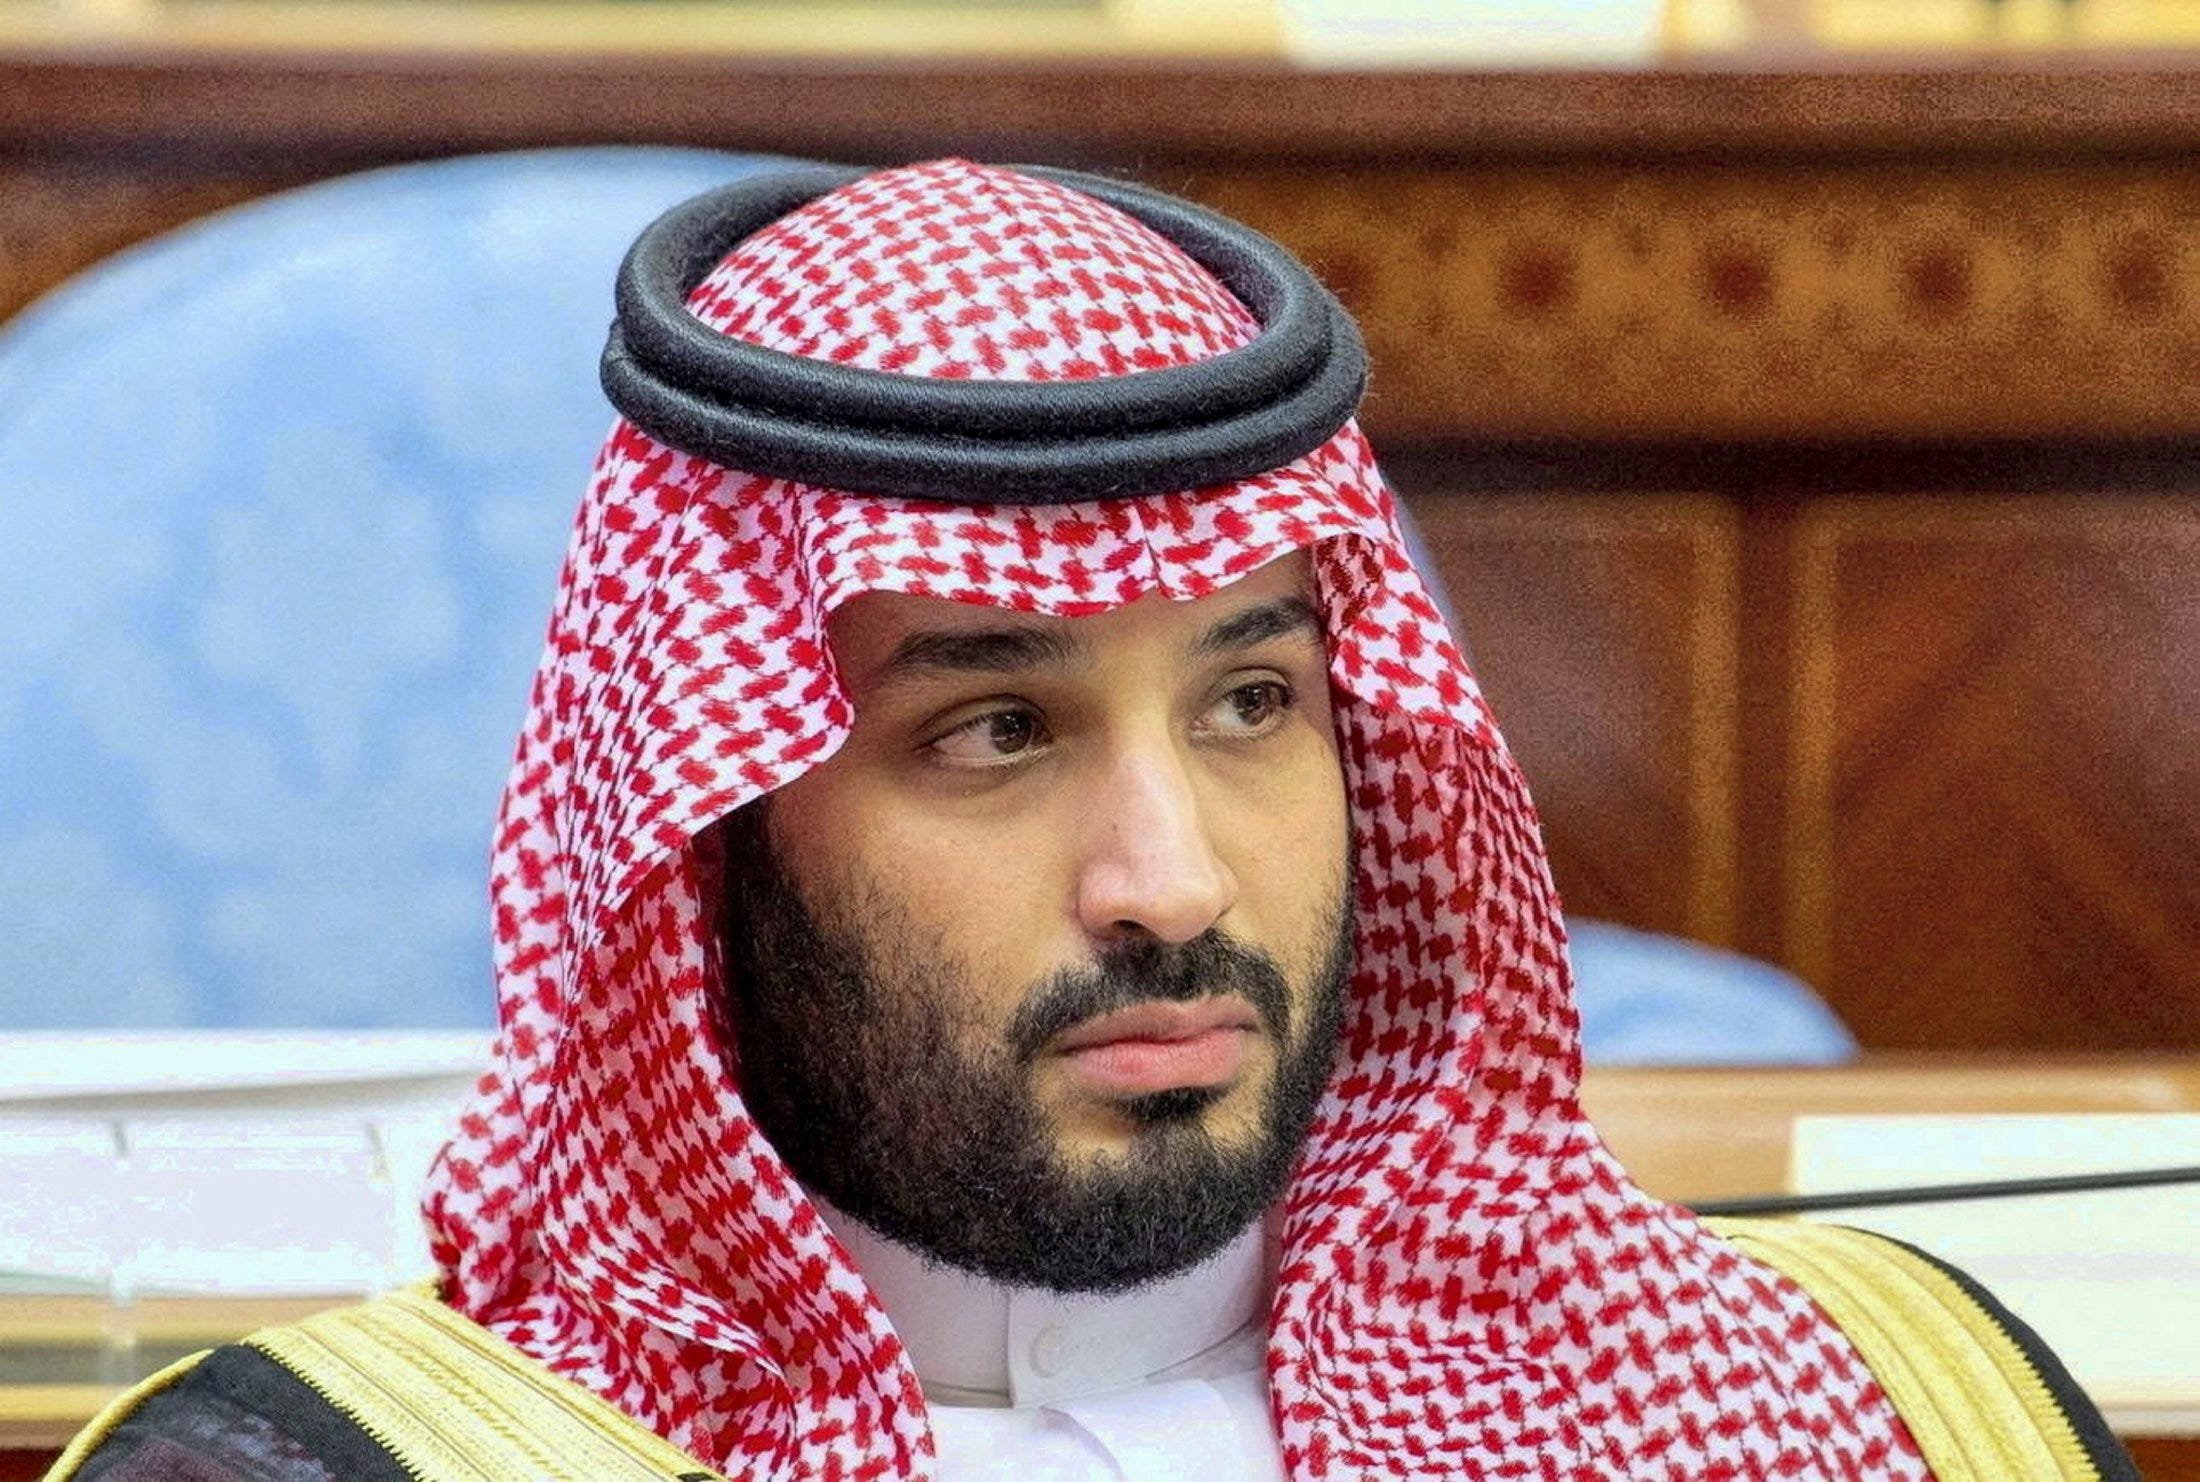 Принцы аль сауды. Мохаммед Бин Салман. Принц Салман Саудовская Аравия. Принц Саудовской Аравии Мухаммед Бен Сальман Аль Сауд. Наследный принц Саудовской Аравии Мухаммед.